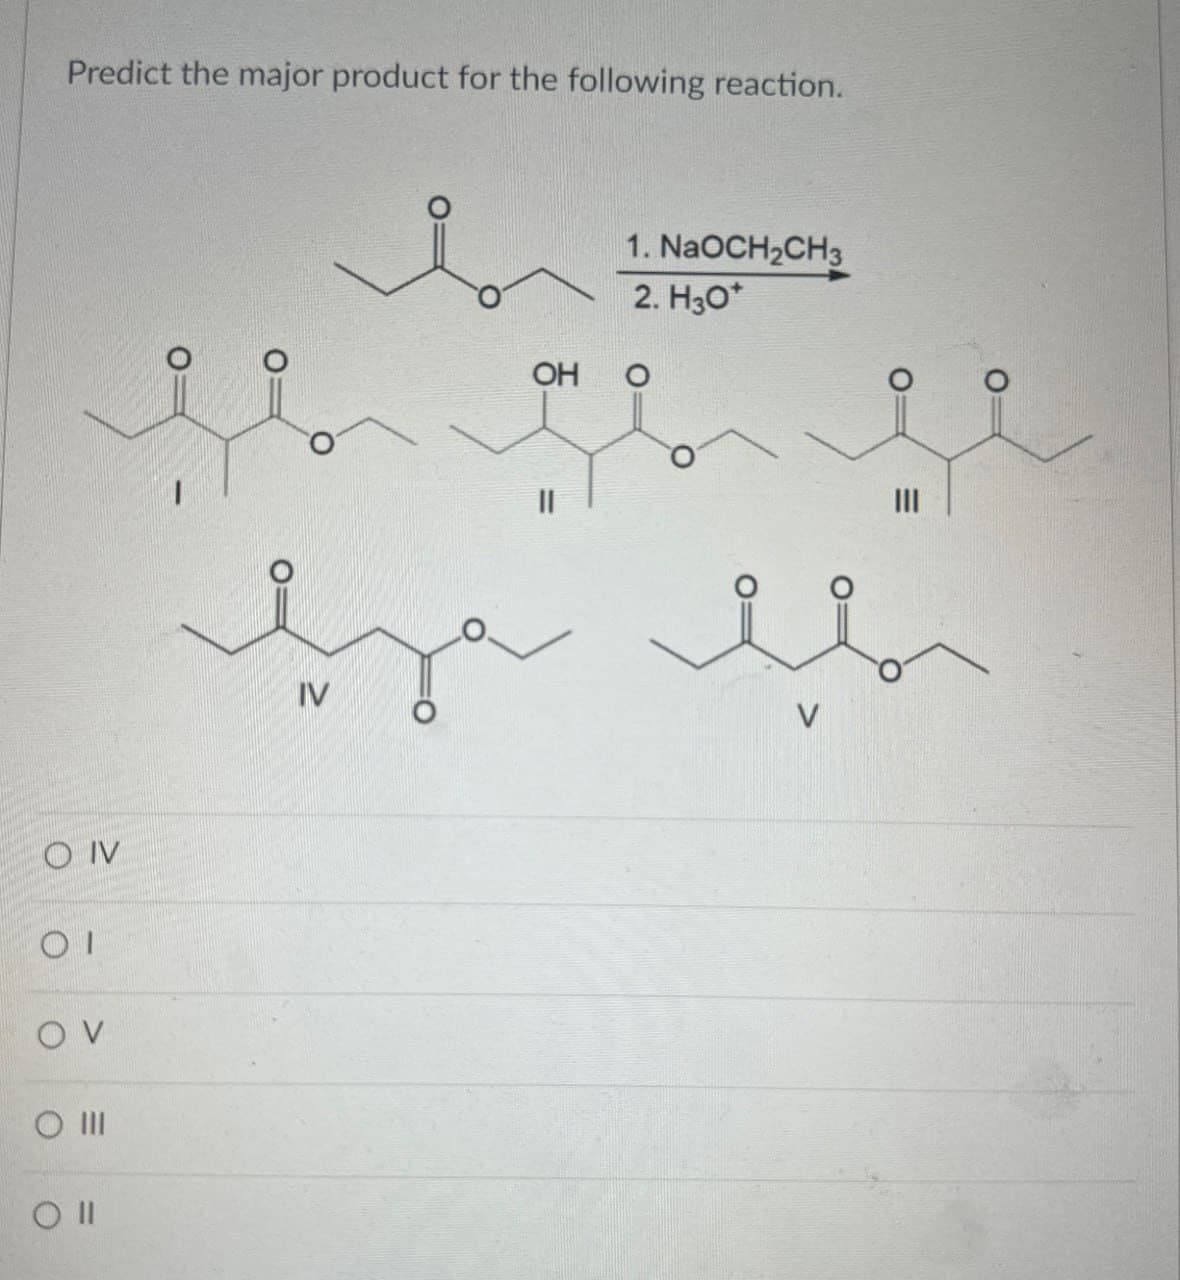 Predict the major product for the following reaction.
O IV
OV
O III
Oll
IV
OH
1. NaOCH2CH3
2. H3O+
O